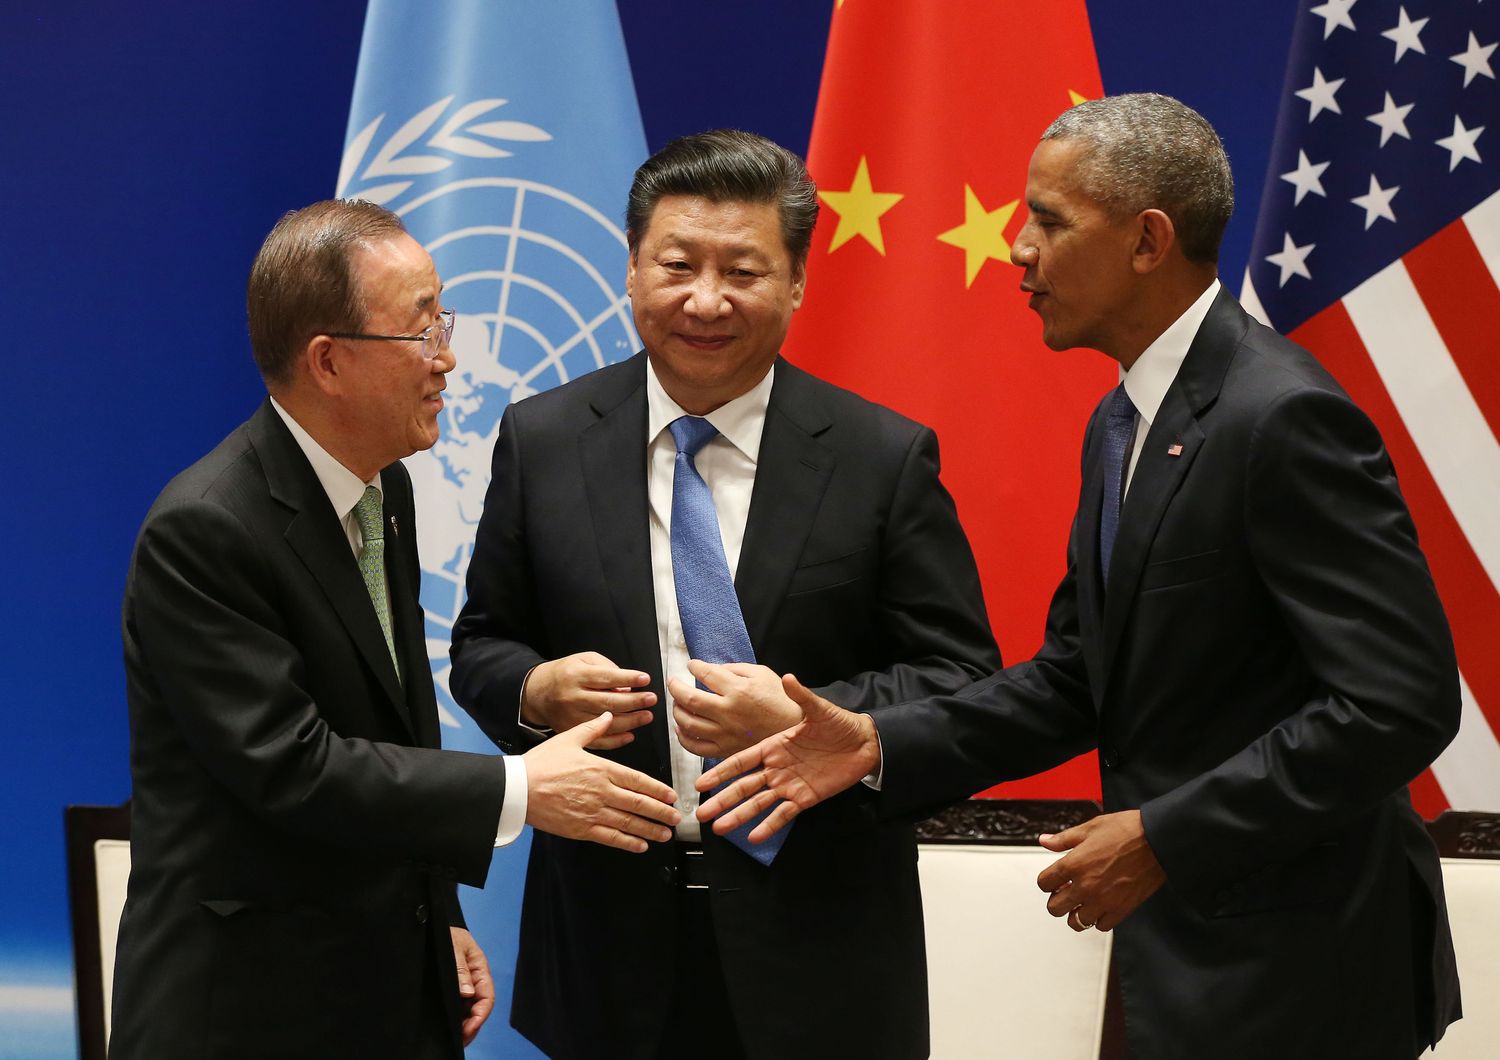 &nbsp;Obama Ban ki-Moon Xi Jinping